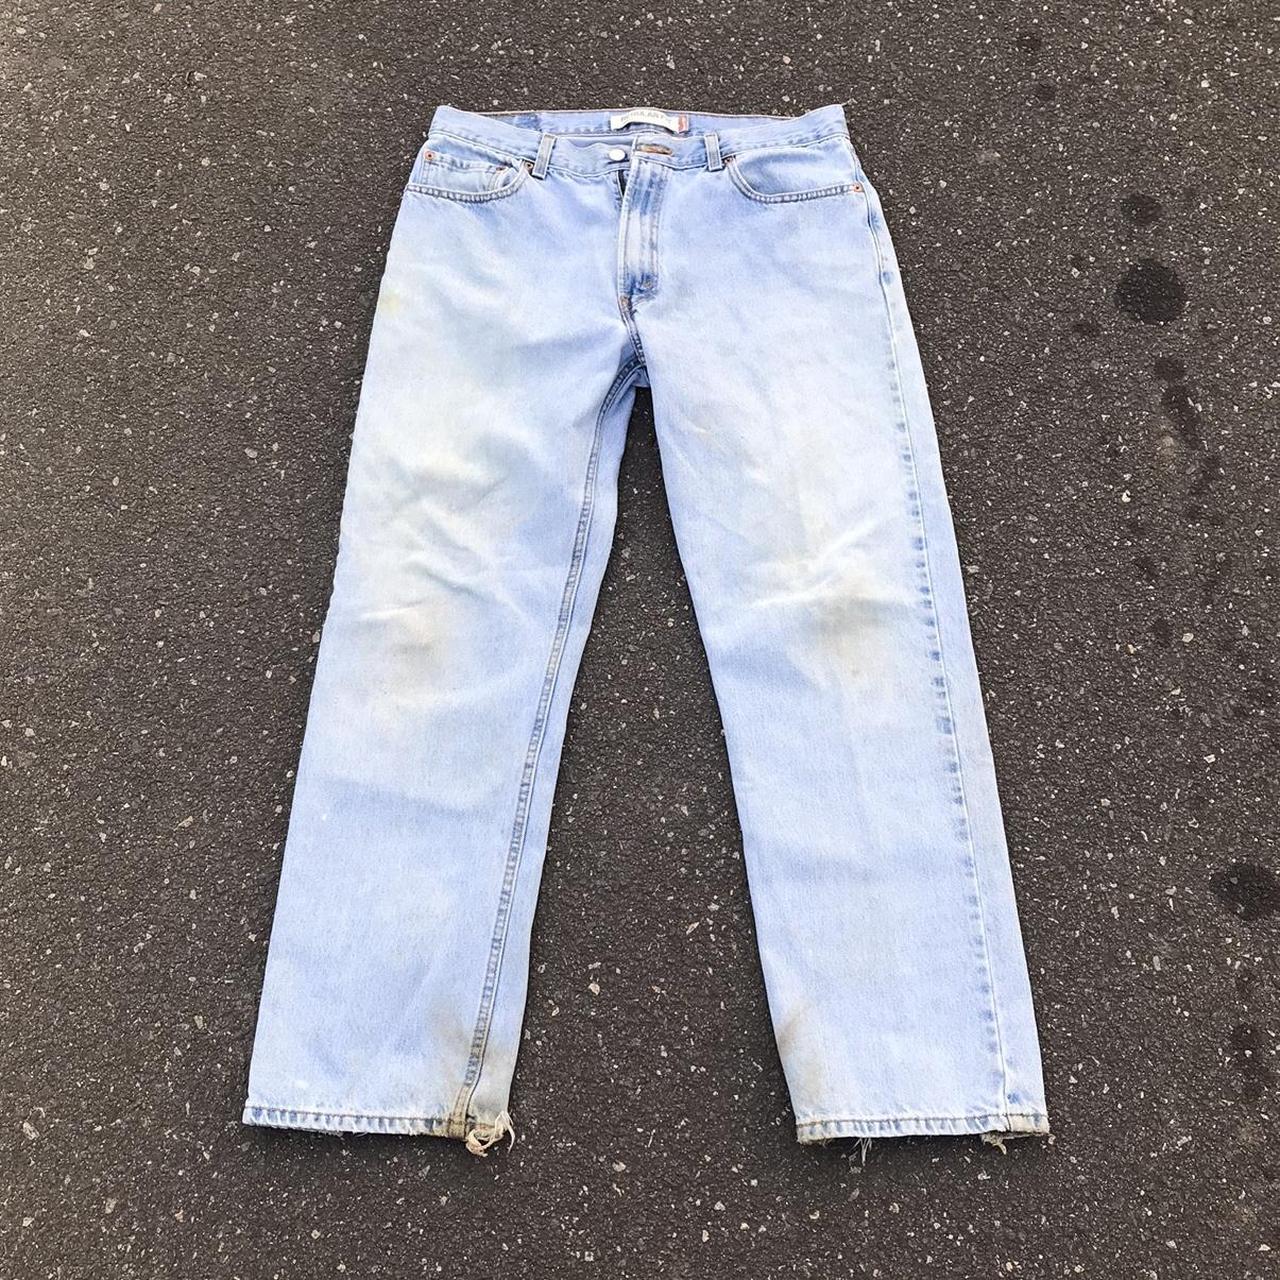 Levi's Men's Blue and White Jeans | Depop